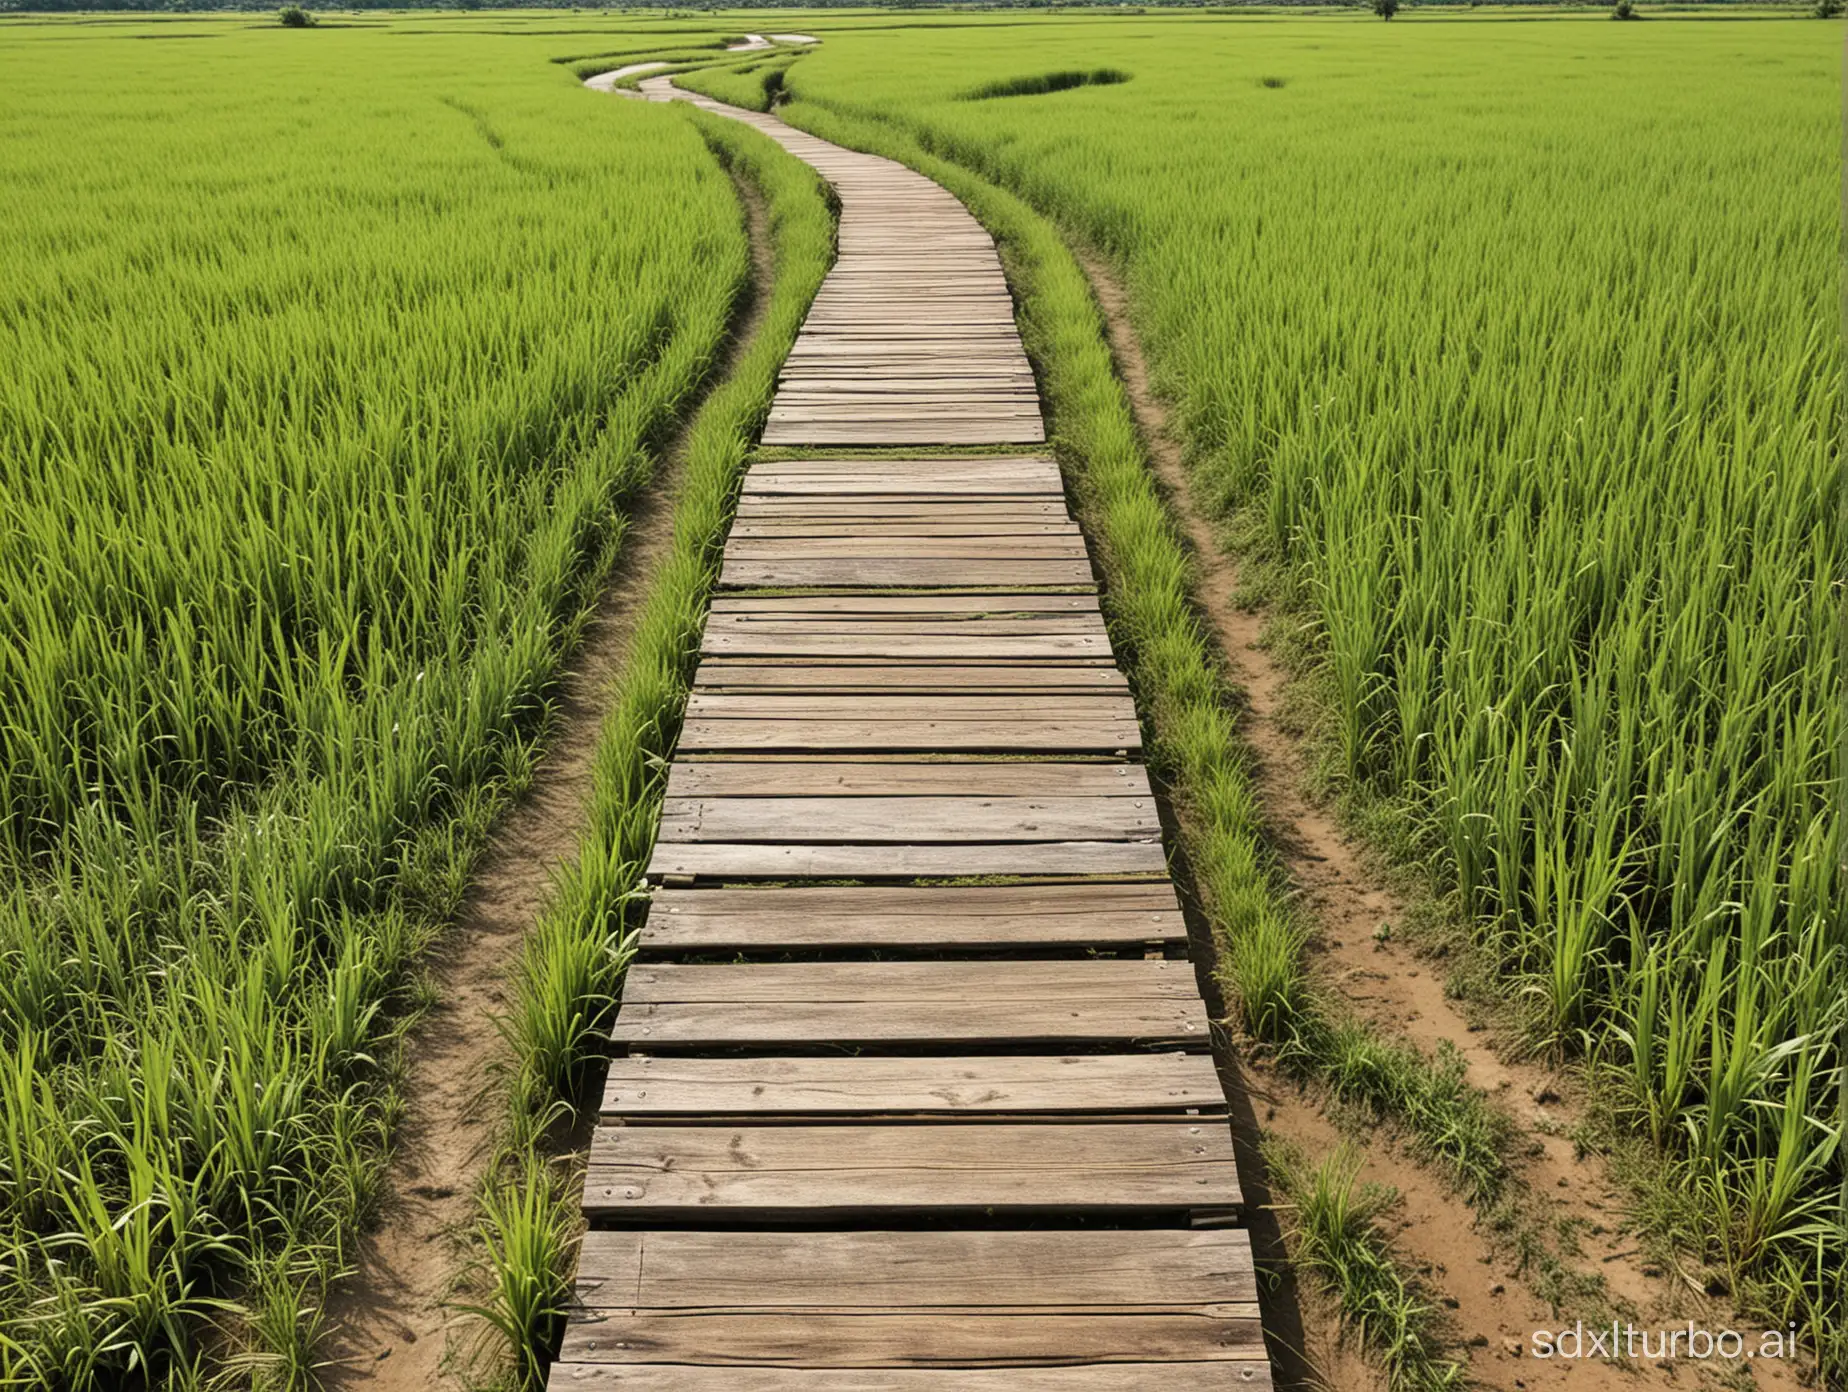 Rustic-Wooden-Plank-Path-Through-Lush-Paddy-Field